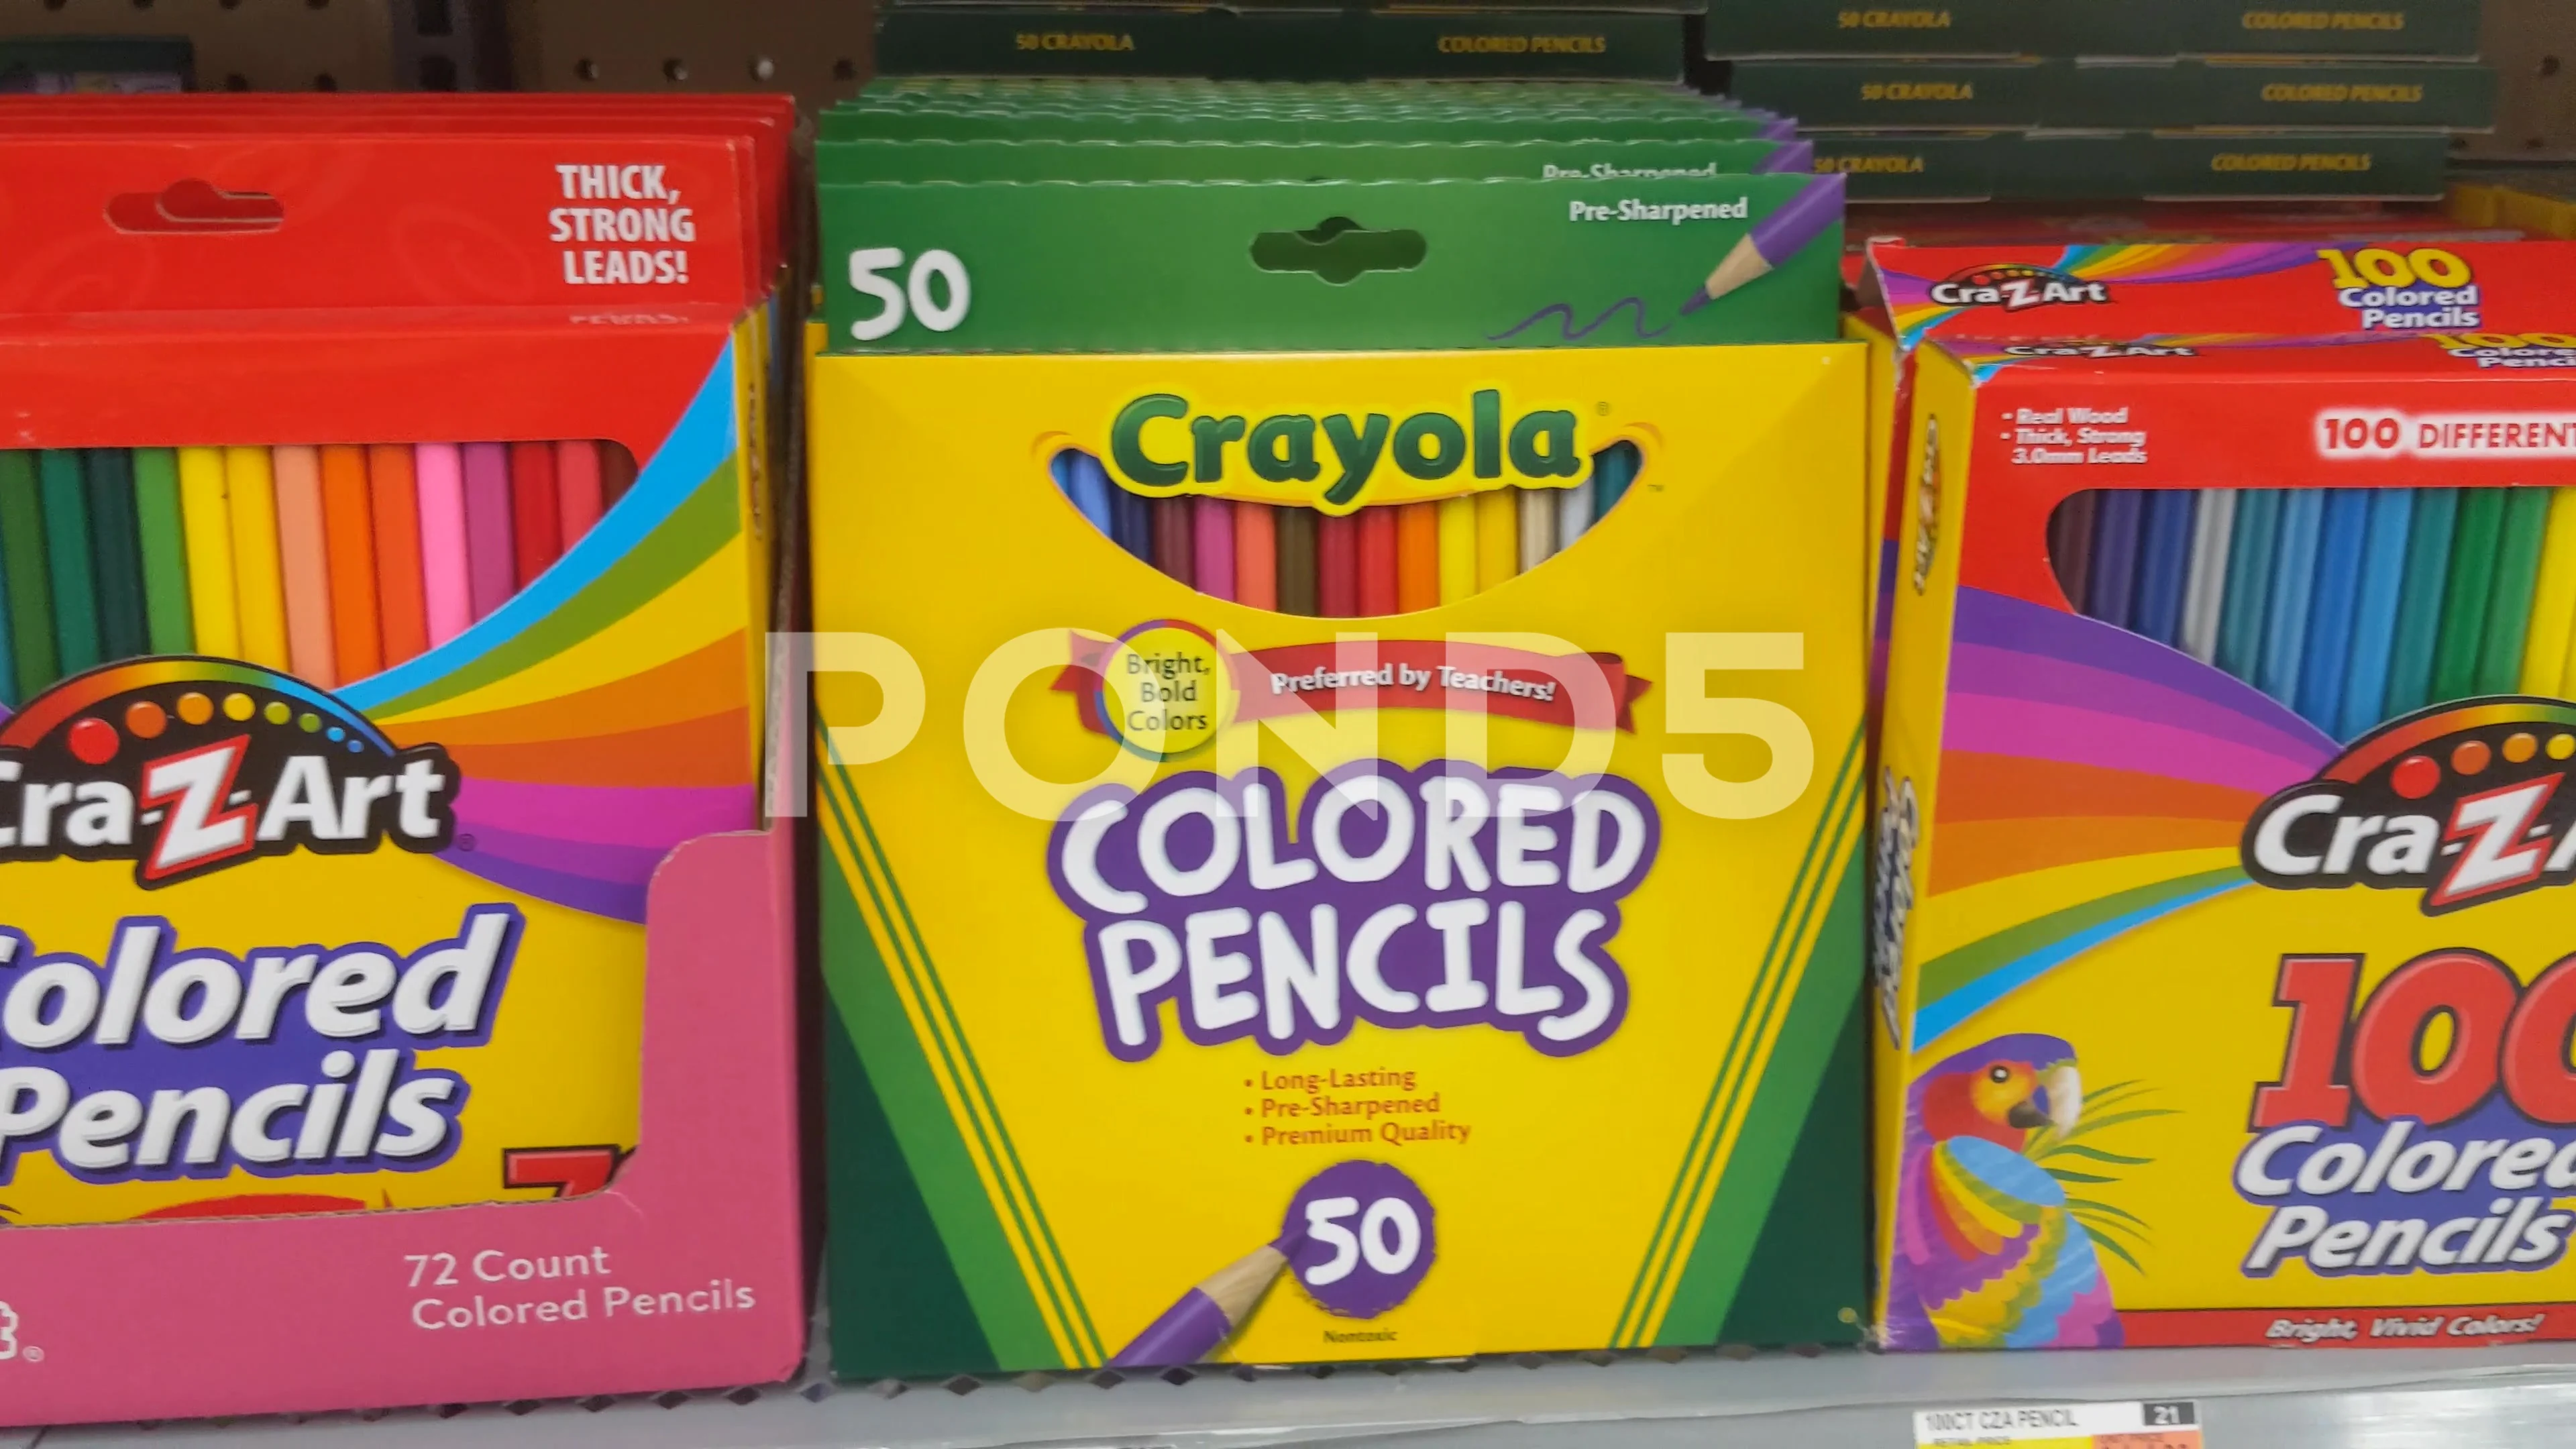 https://images.pond5.com/various-crayola-colored-pencils-retailer-143169637_prevstill.jpeg